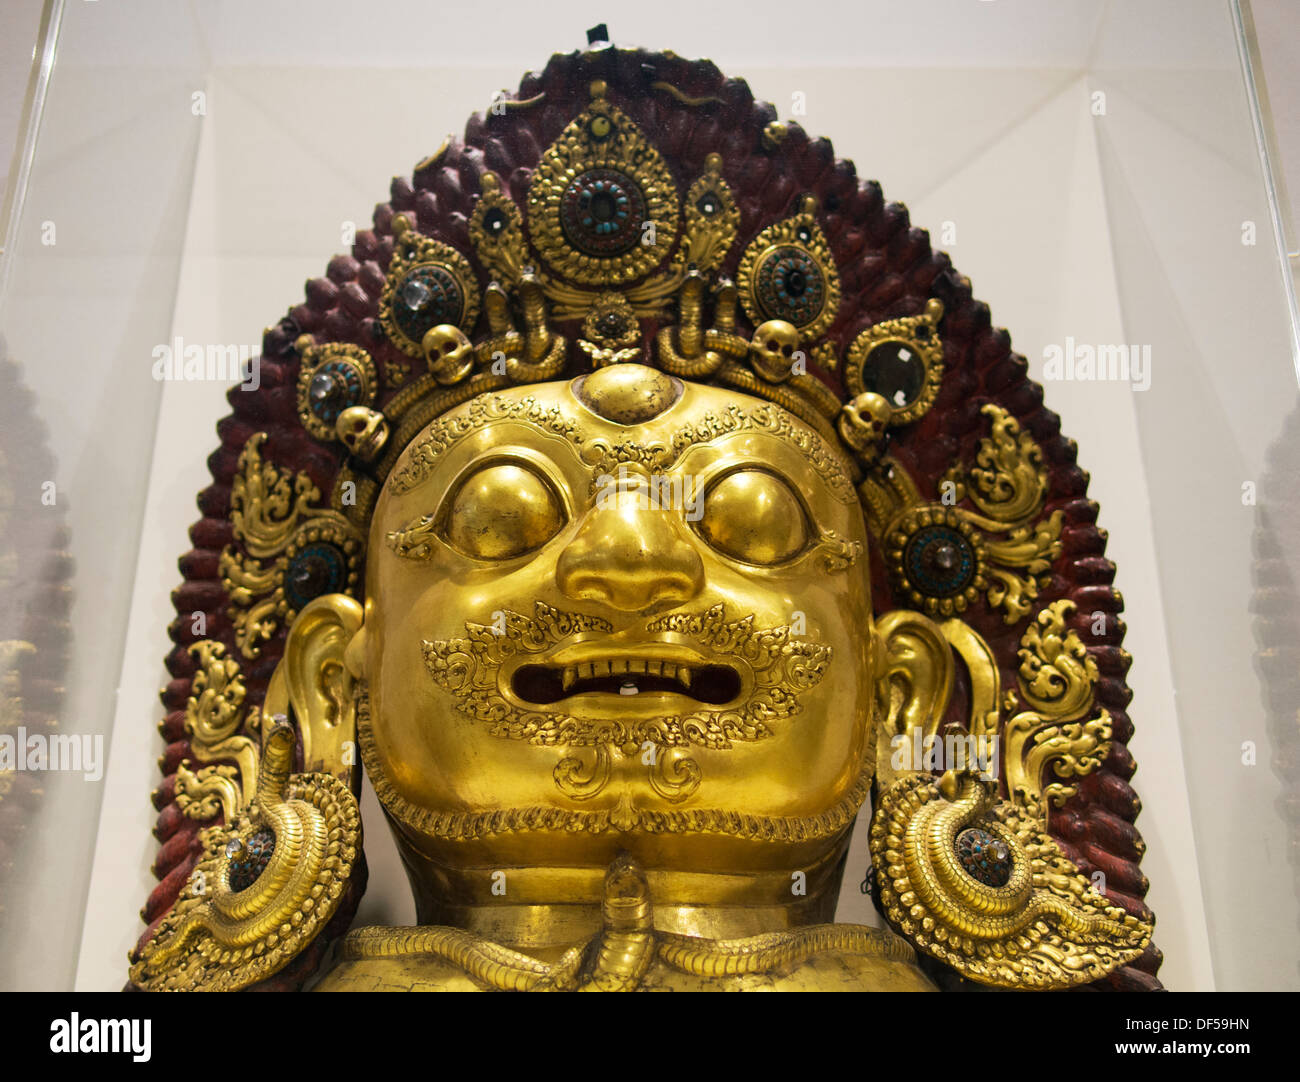 The Victoria and Albert Museum, London - Nepalese mask of Bhairava, a wrathful manifestation of Shiva Stock Photo